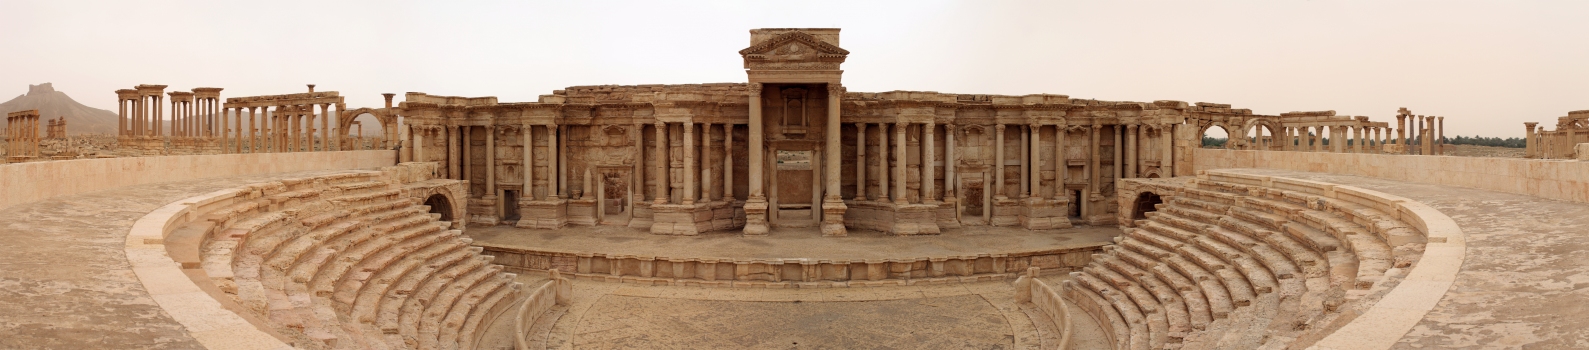 Roman Theater at Palmyra